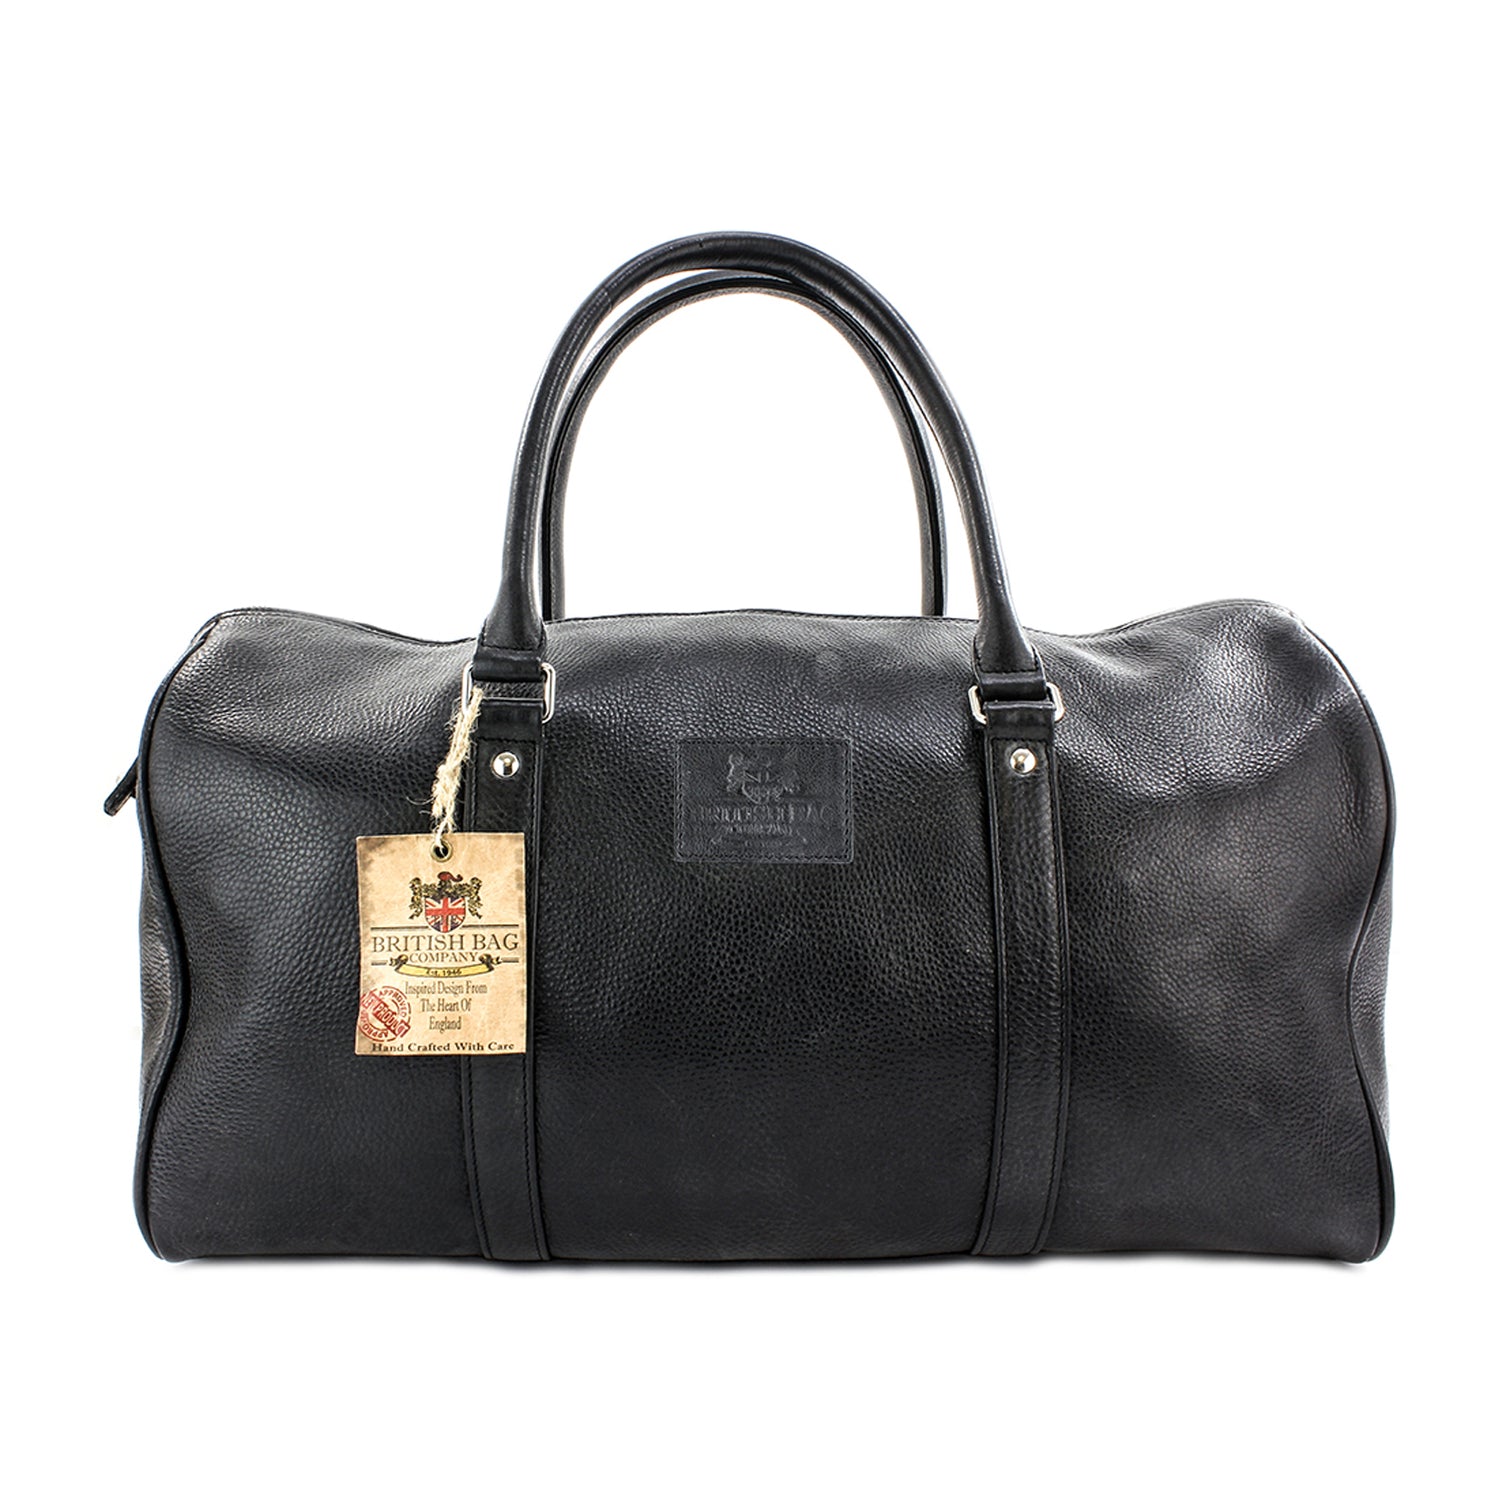 British Bag Co. Black Pebble Grain Leather Holdall